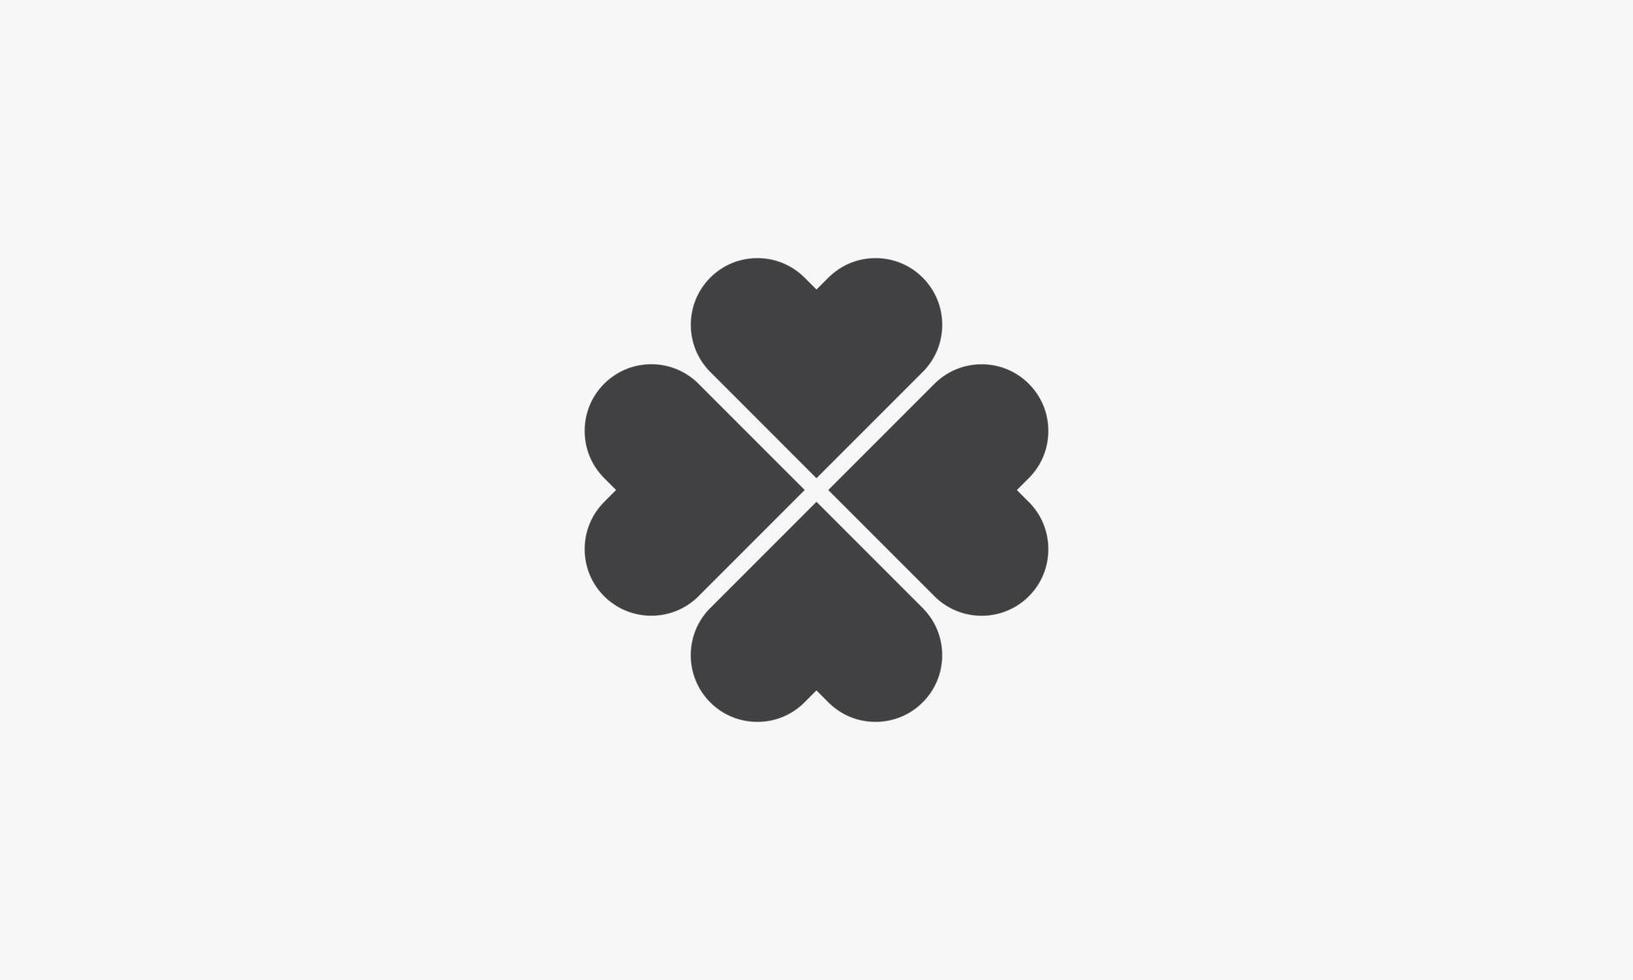 four heart clover leaf icon design vector illustration.